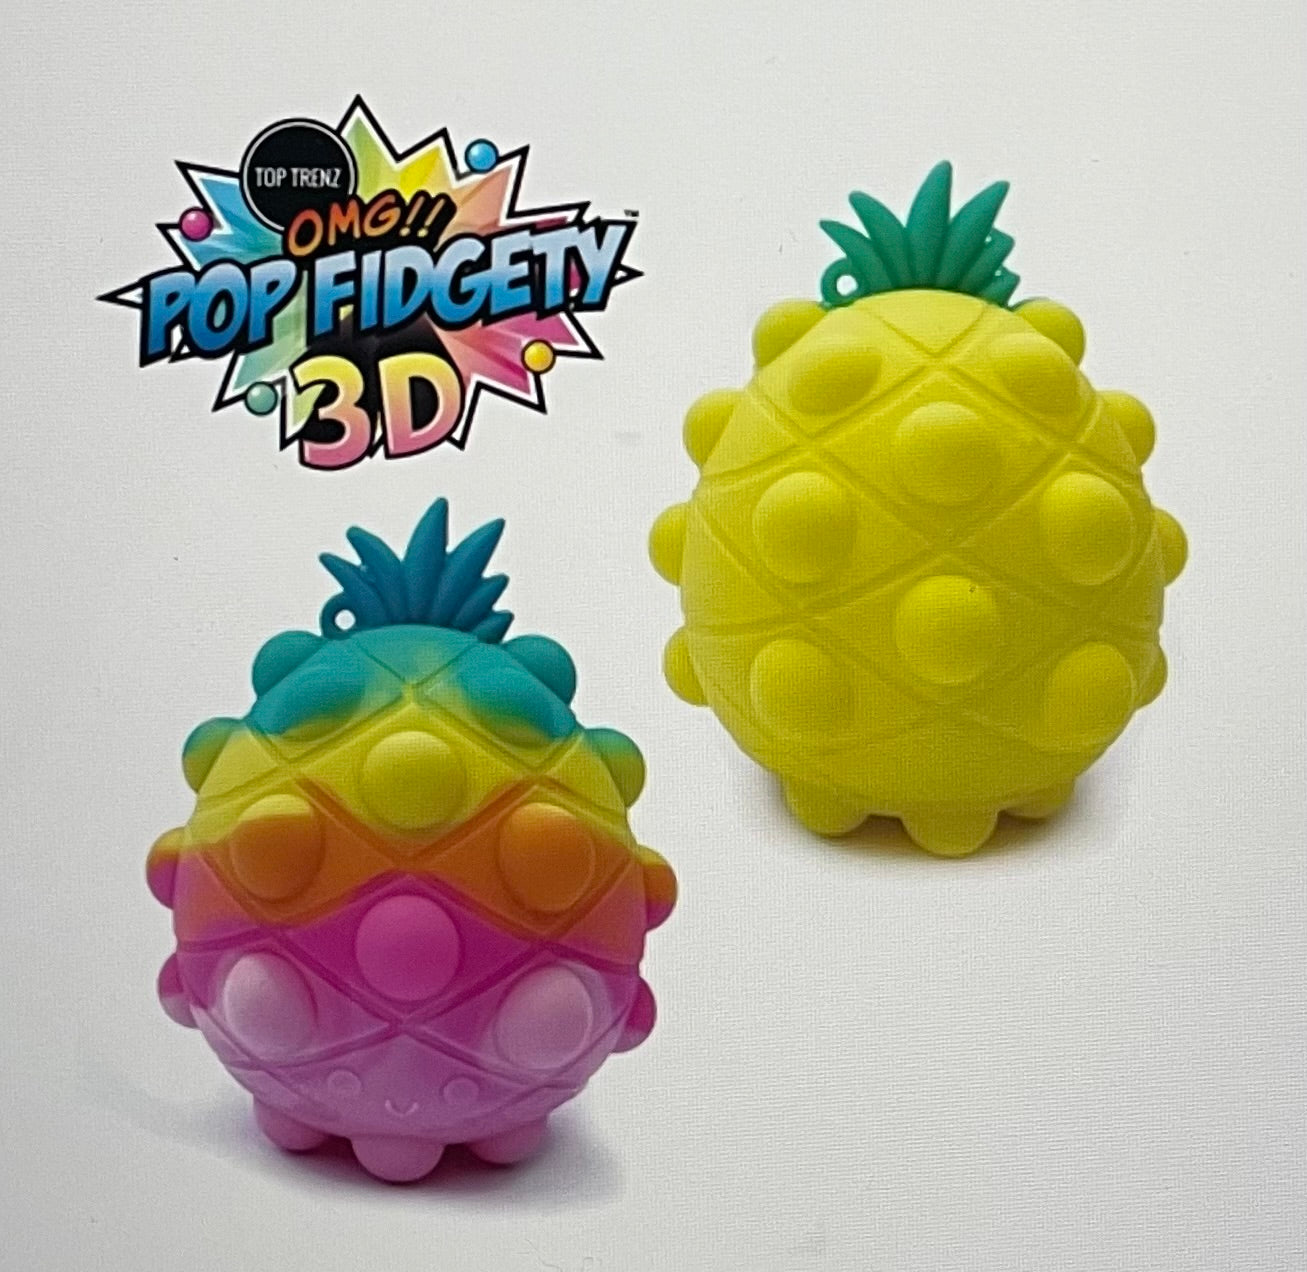 OMG Pop Fidgety 3D - Pineapple Ball